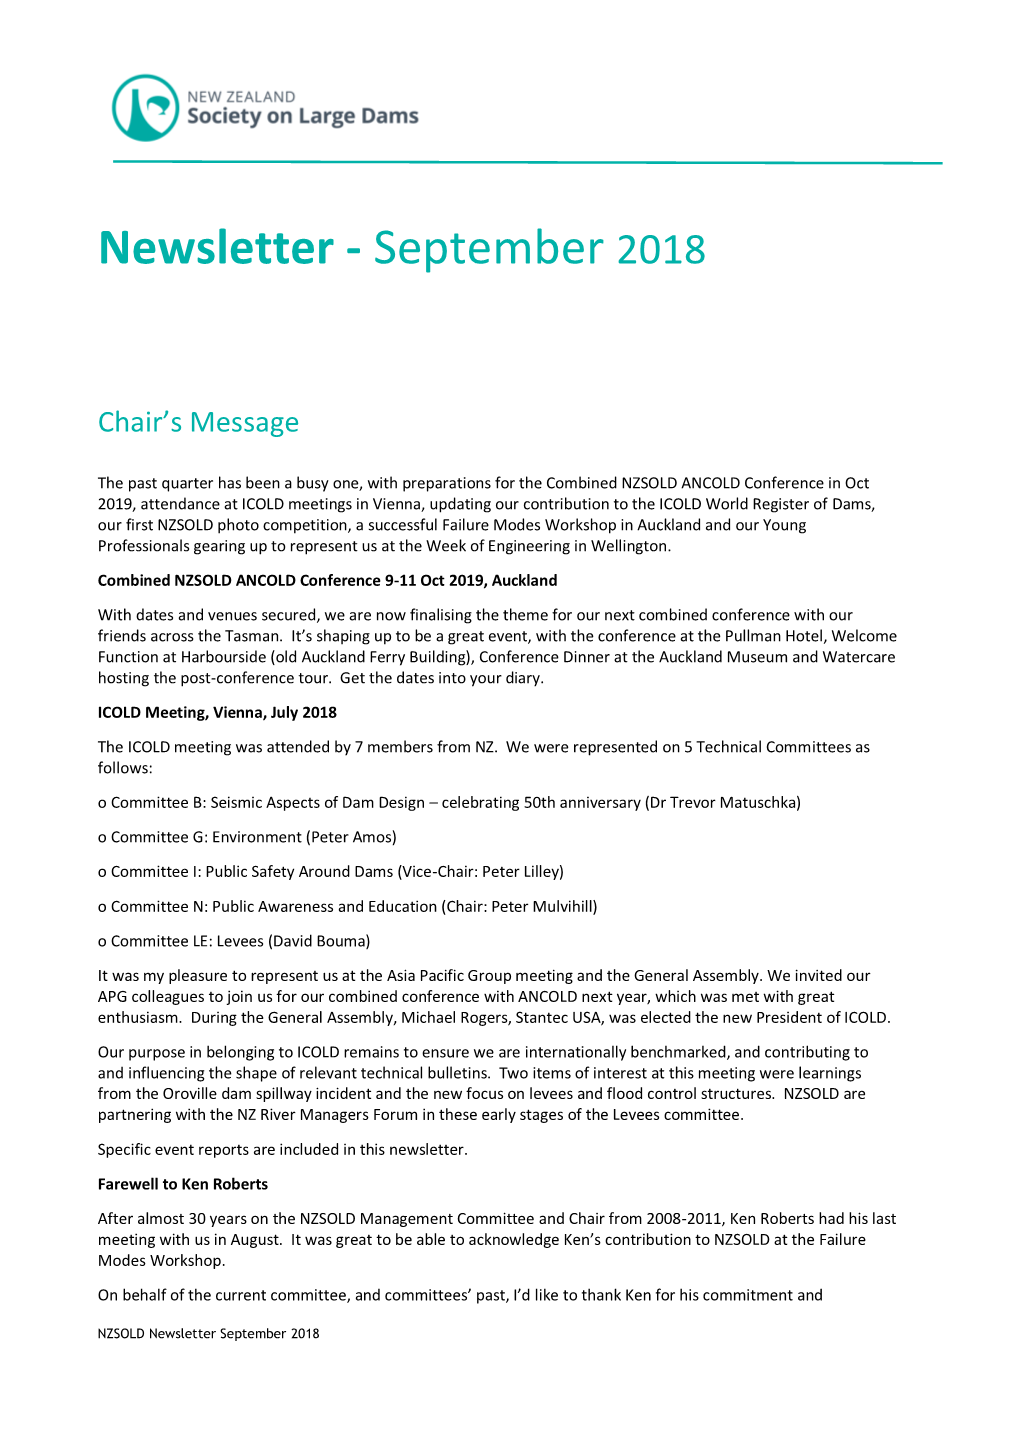 NZSOLD September 2018 Newsletter